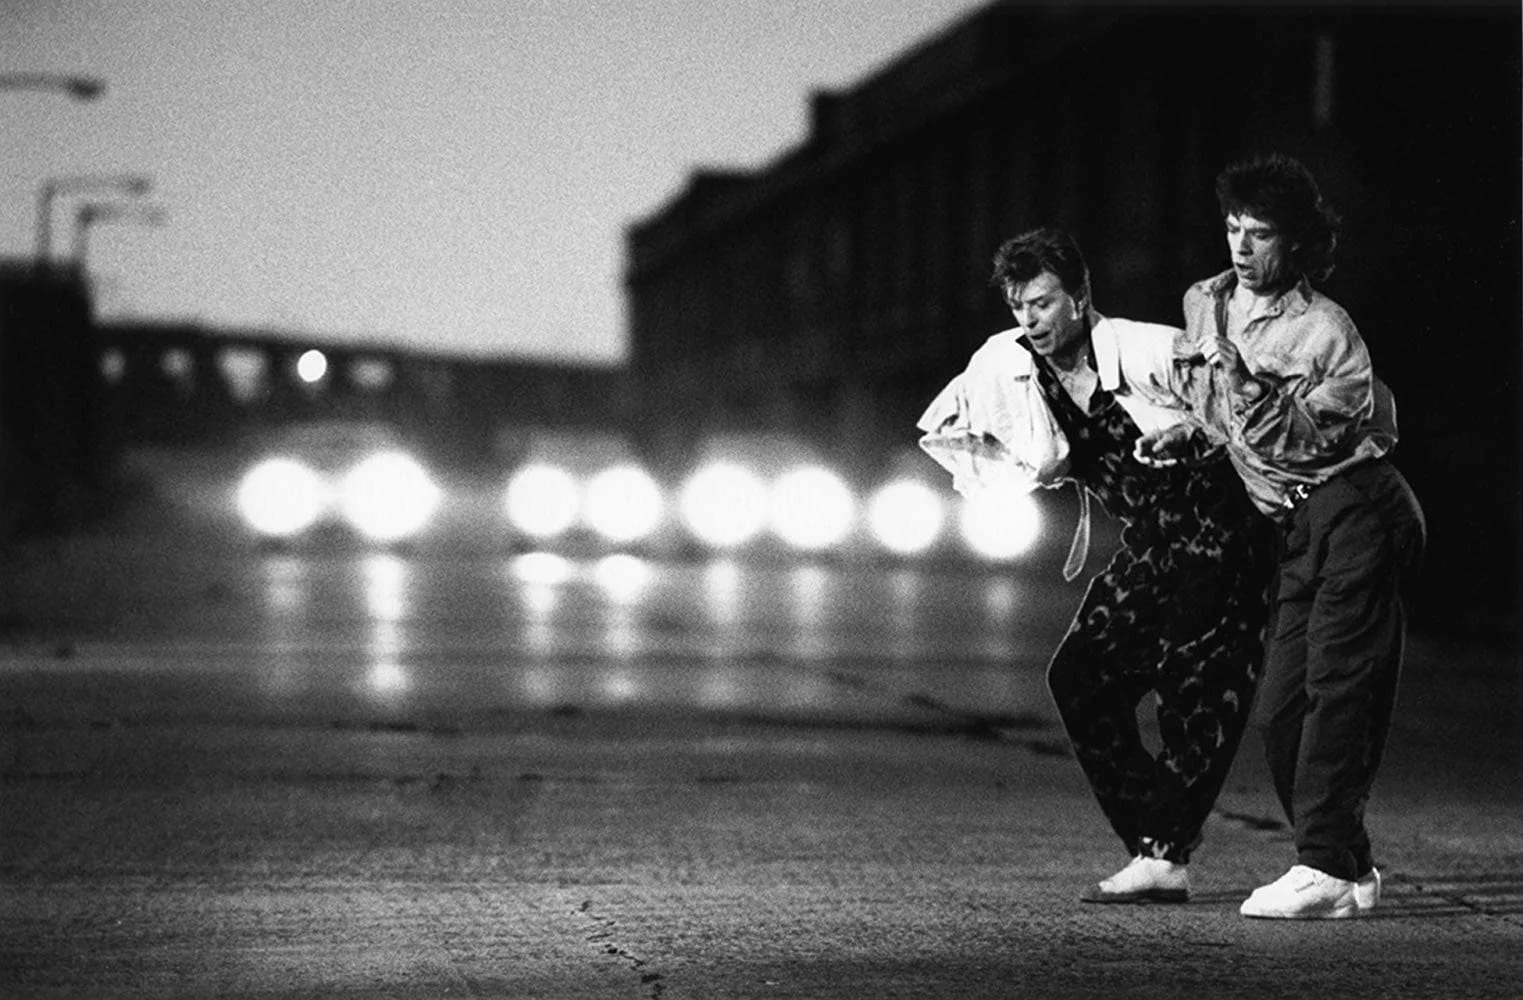 Во время съёмок клипа Dancing in the Street (1985). Дэвид Боуи и Мик Джаггер